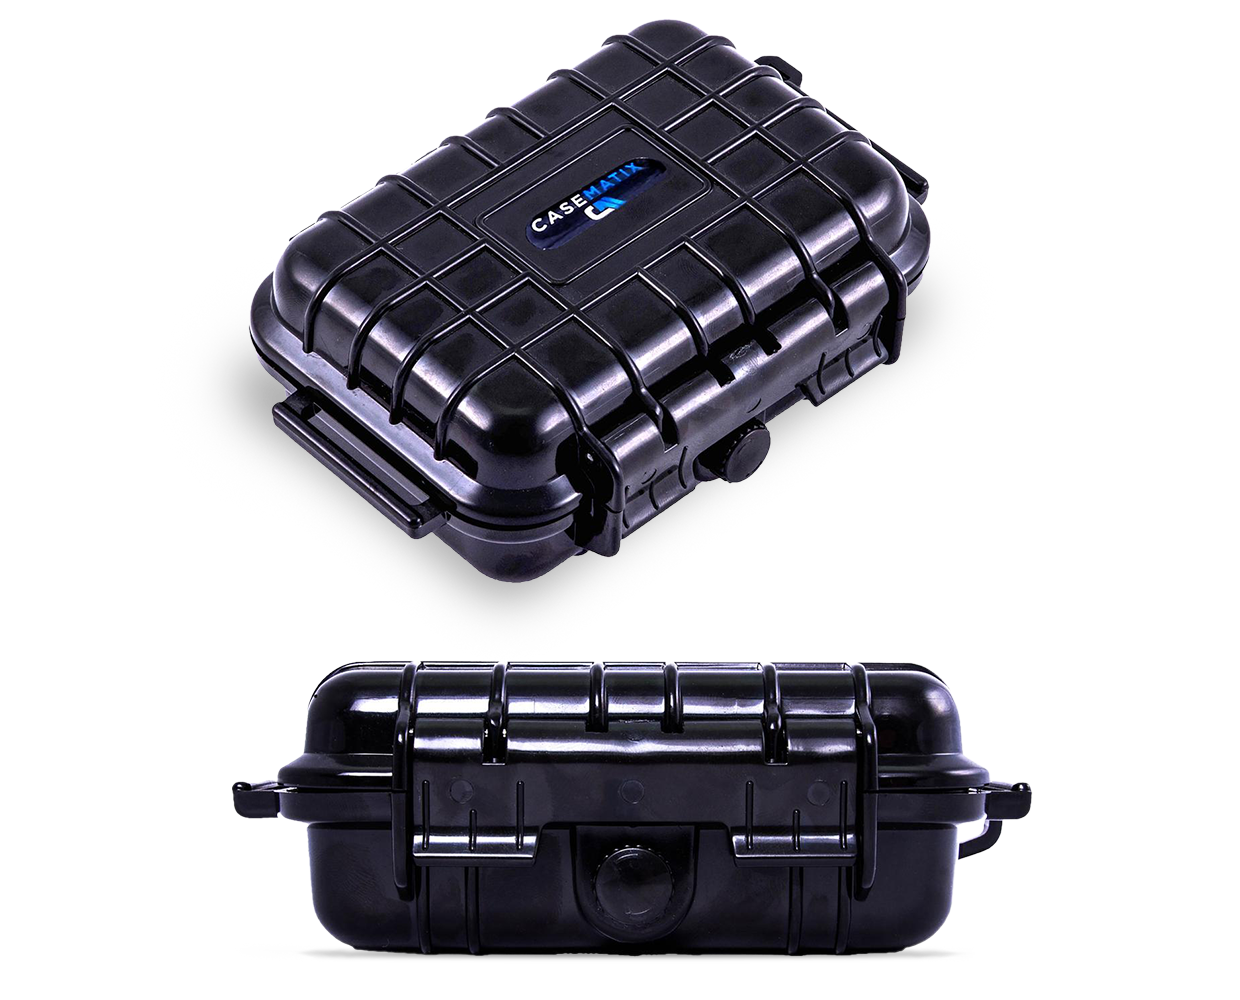 Casematix Hardware Wallet Waterproof Hard Case, para  Ledger Nano X, Trezor Model T, Trezor One, and More